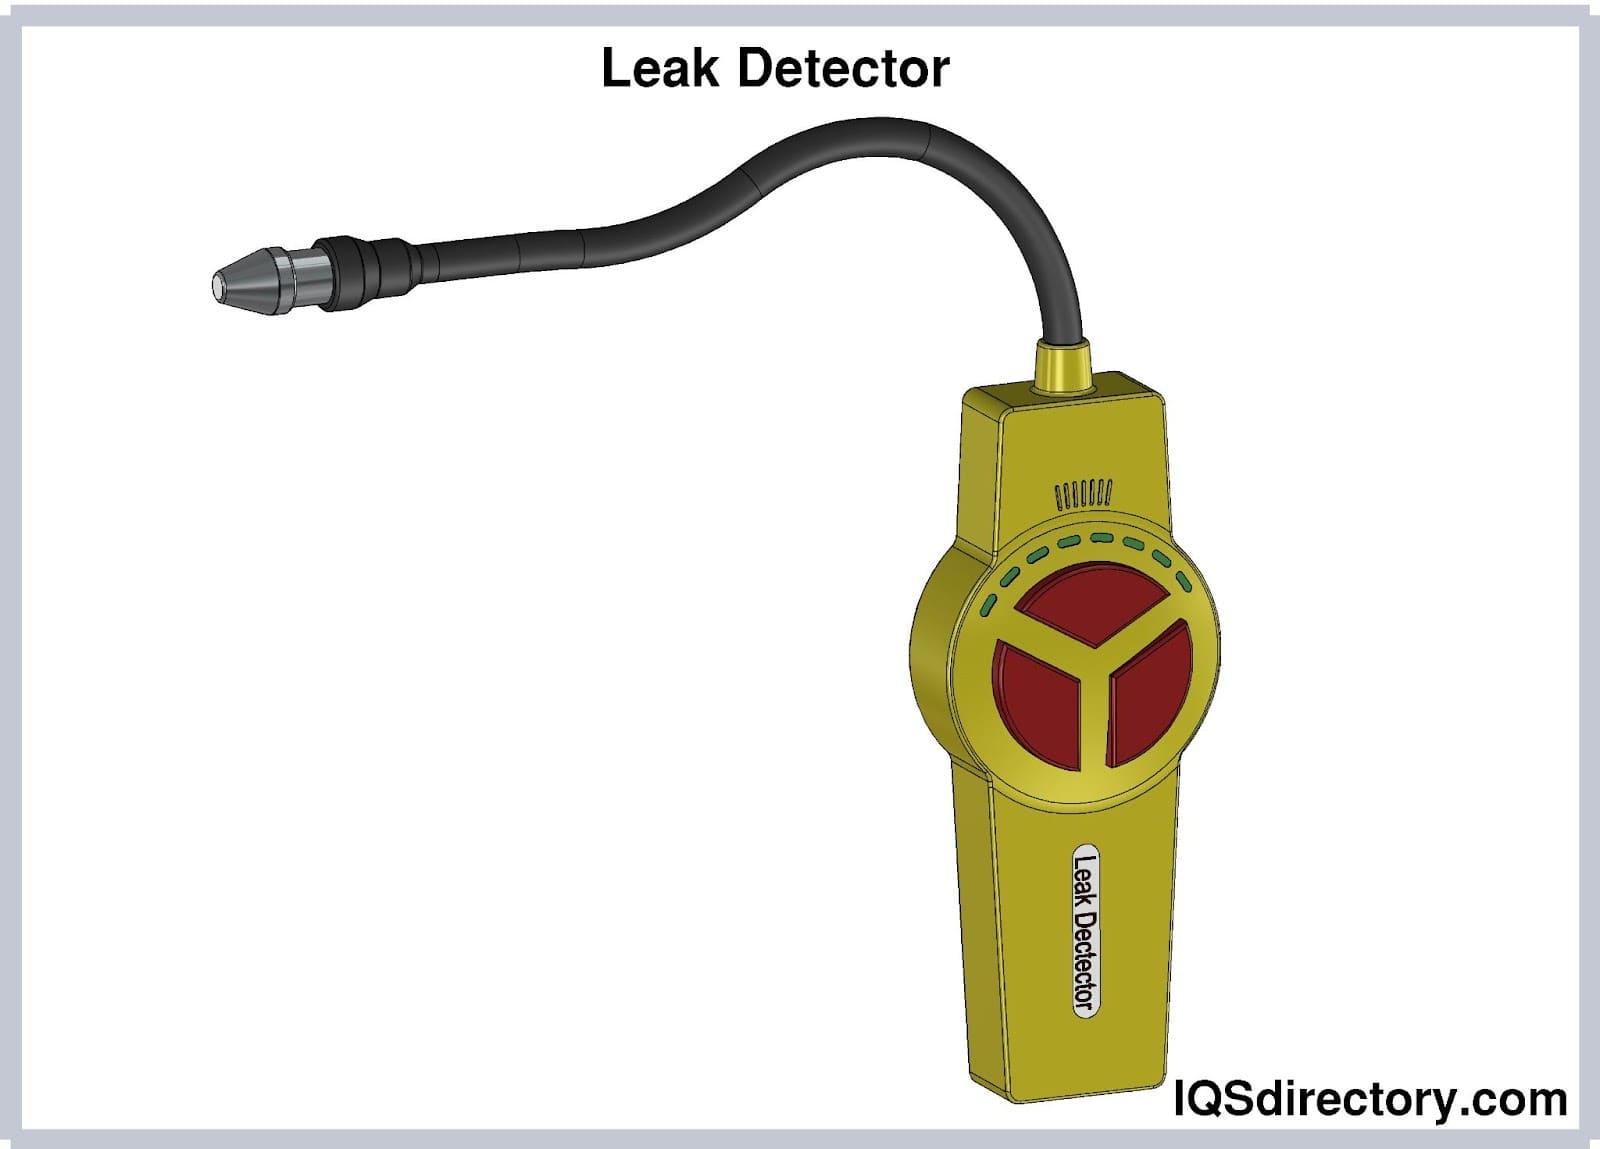 https://www.iqsdirectory.com/articles/leak-detectors/leak-detector.jpg